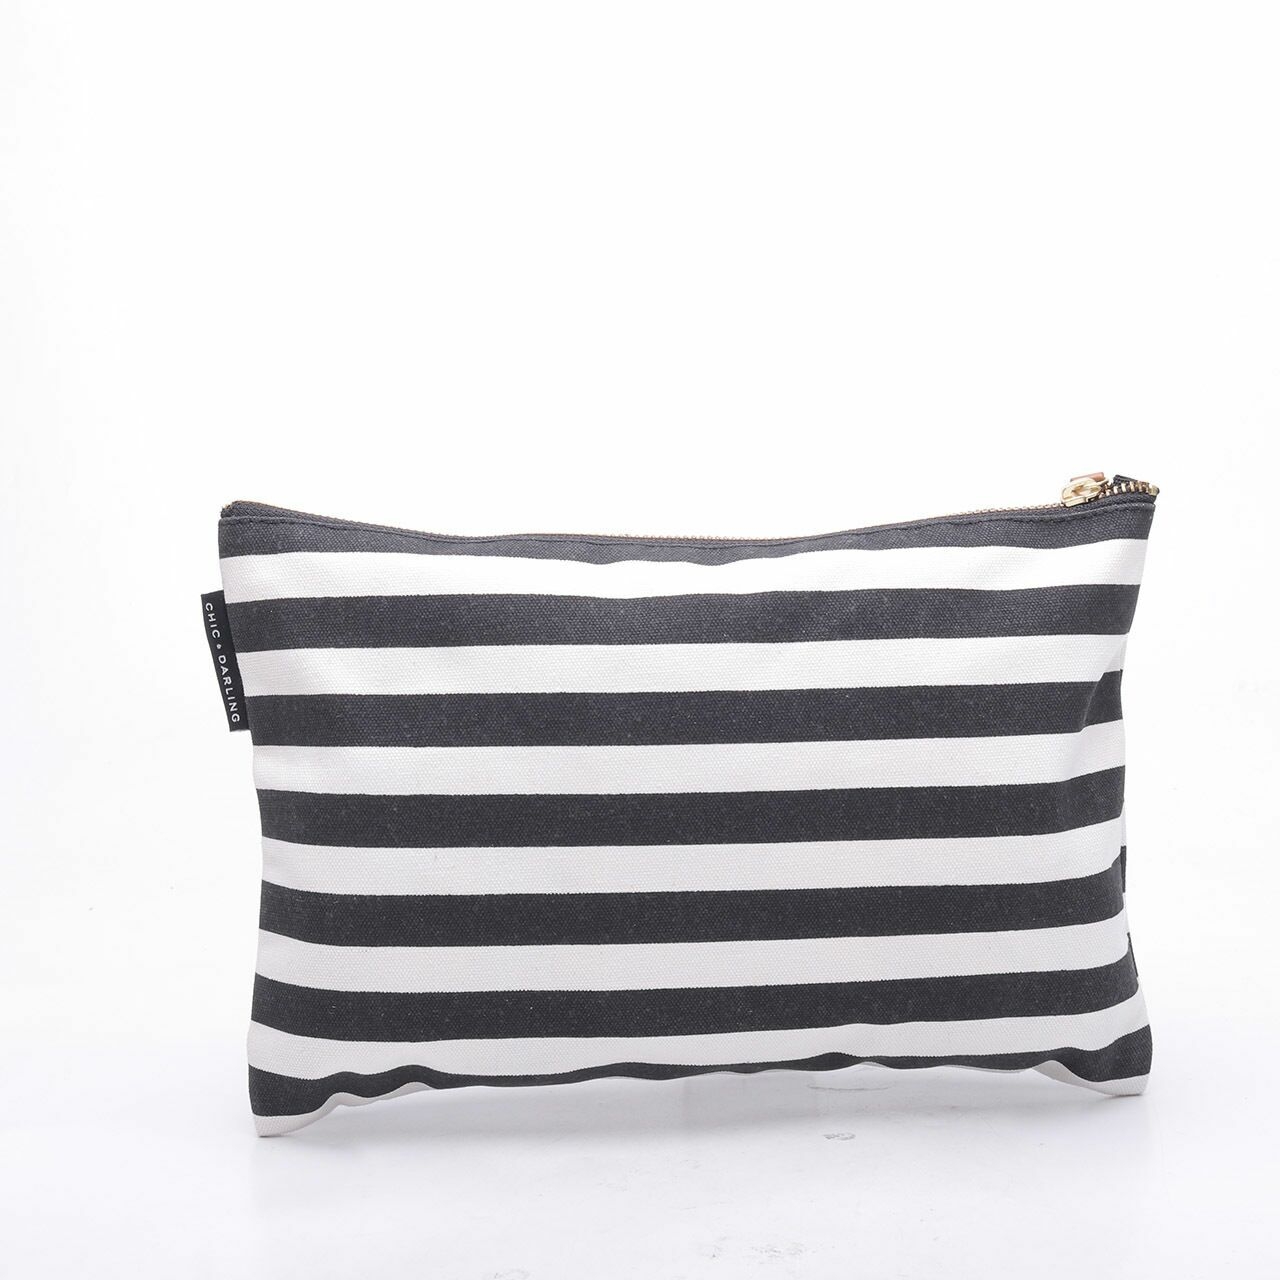 Chic & Darling Black & White Stripes Pouch